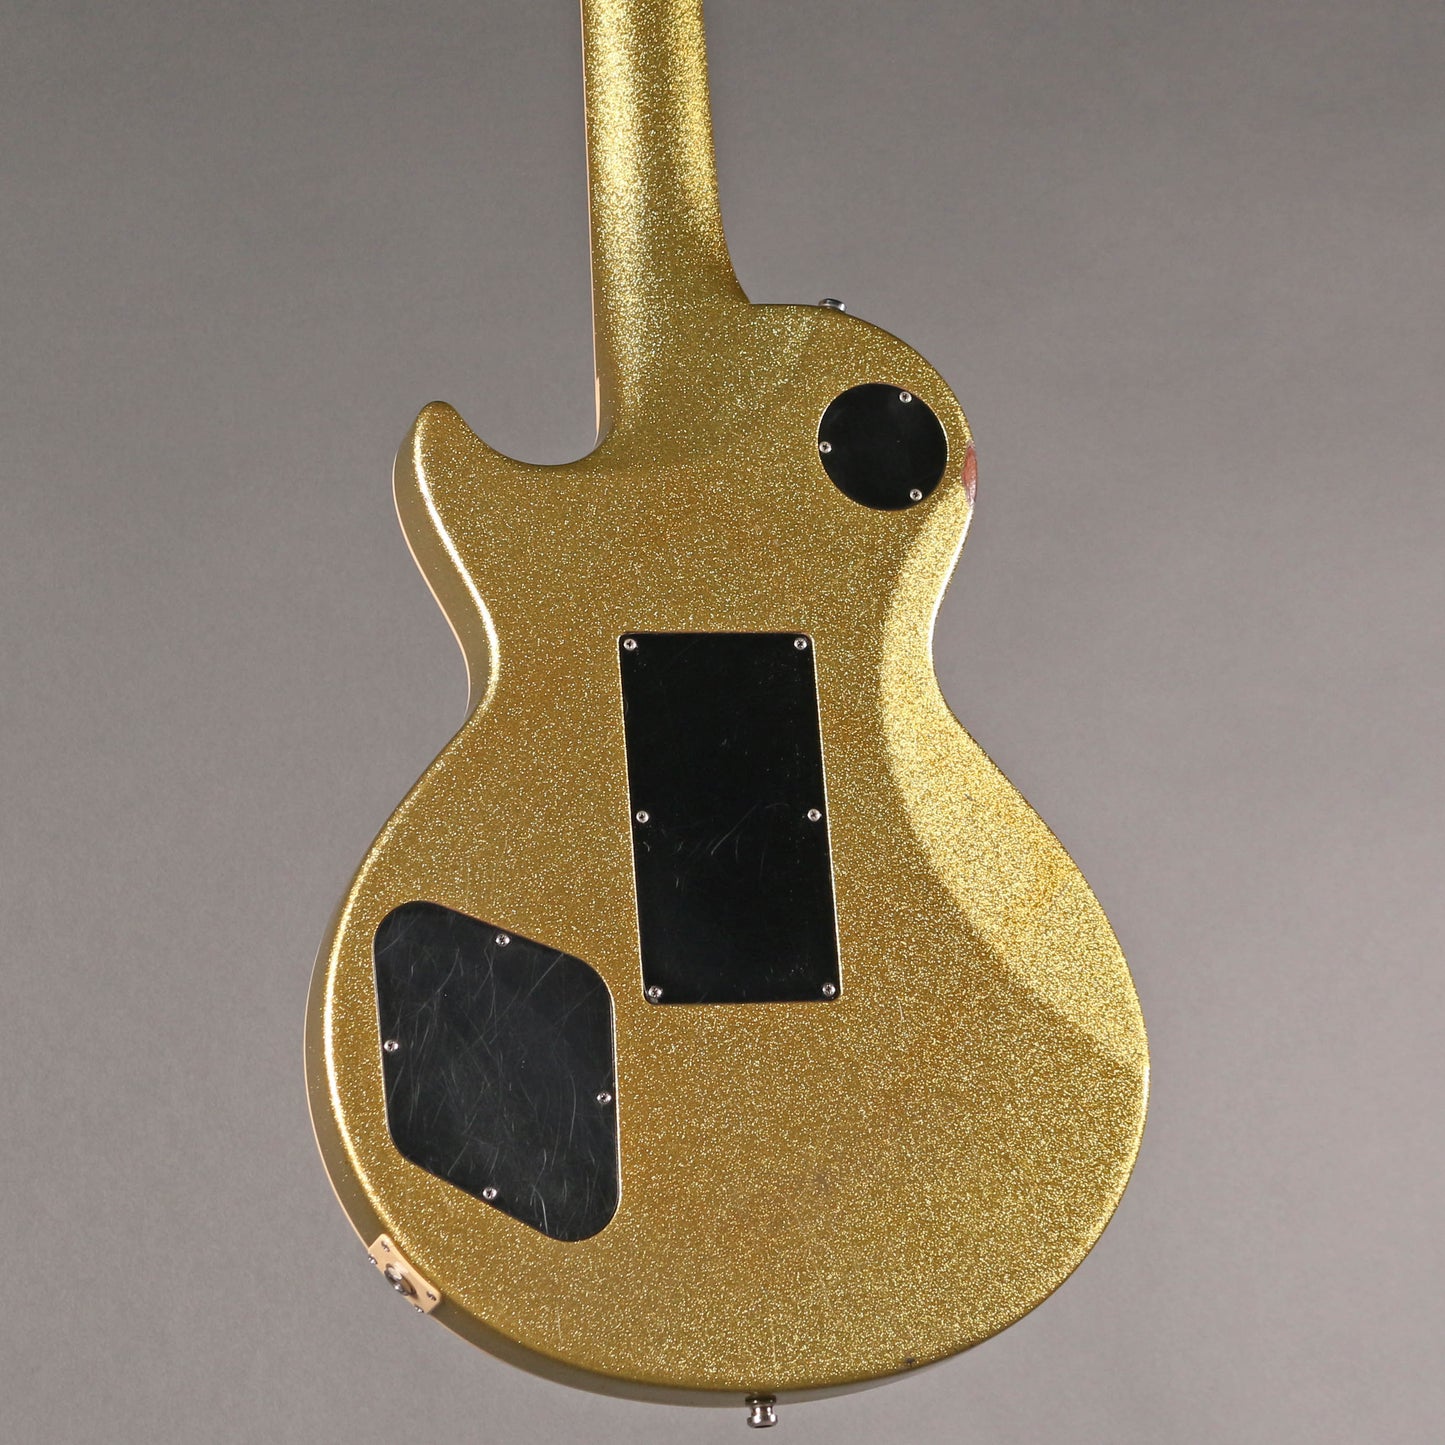 2006 Gibson Custom Shop Les Paul [*ビビ・マギル・オブ・ビヨンセ・コレクション]